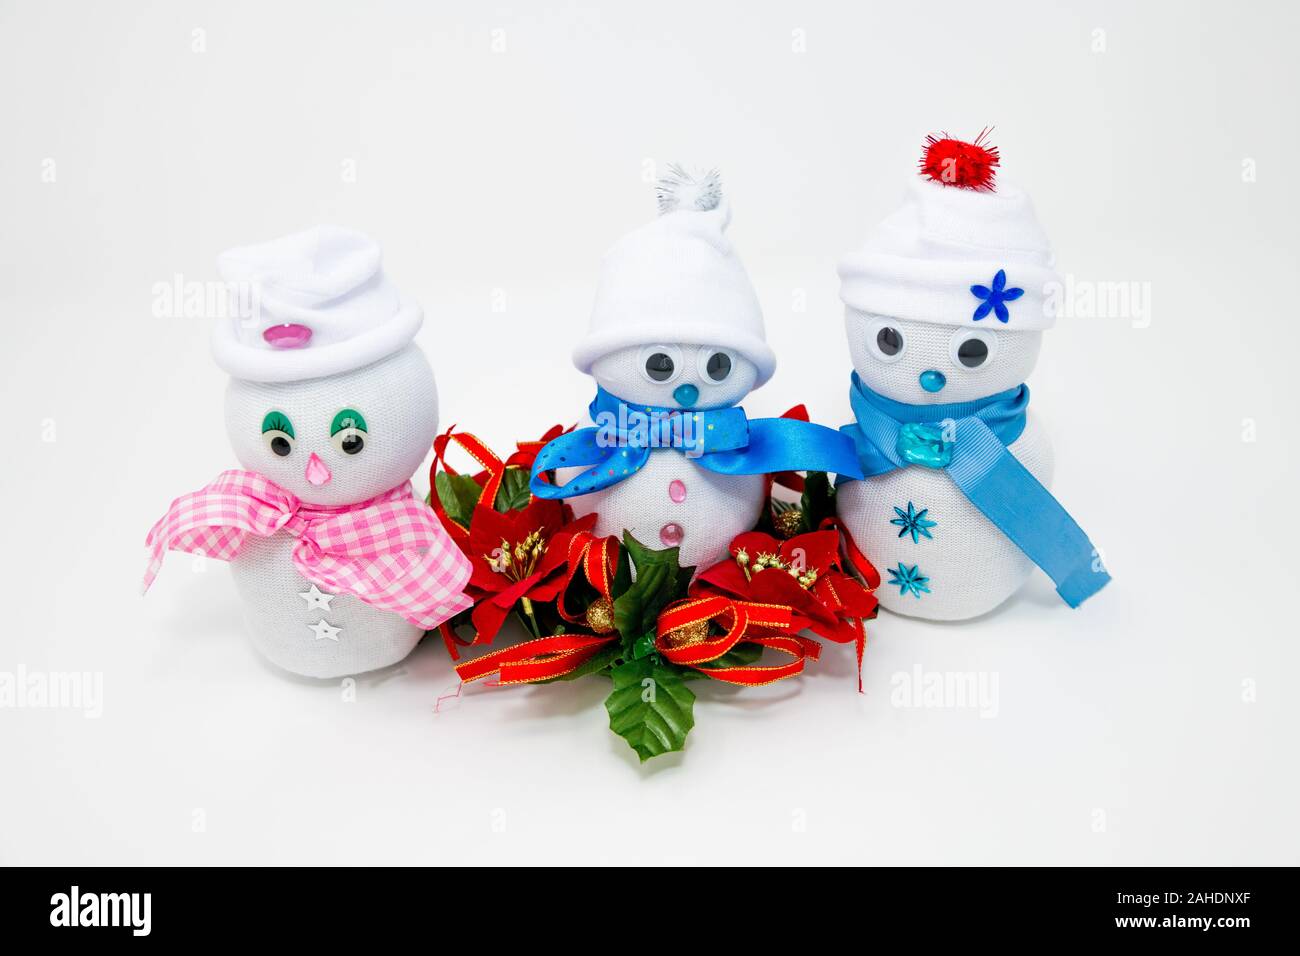 https://c8.alamy.com/comp/2AHDNXF/three-handmade-snowmen-made-from-white-socks-2AHDNXF.jpg